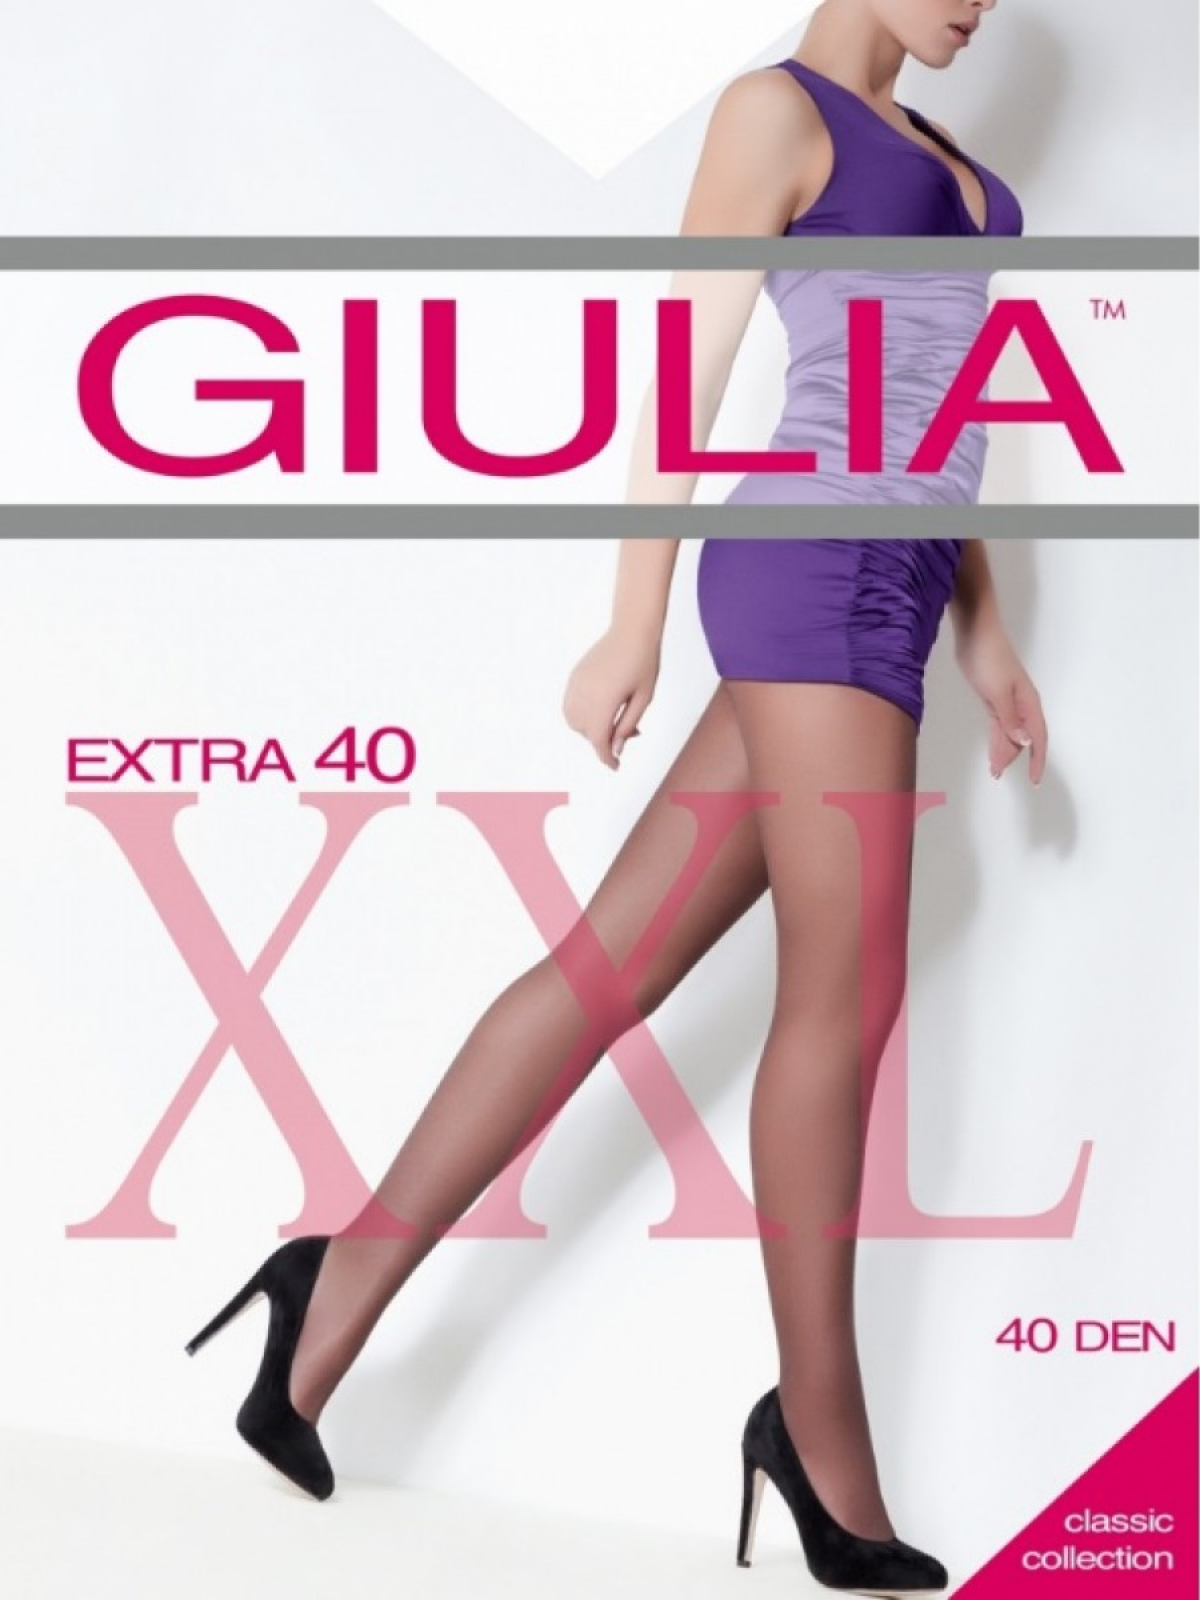 Колготки Giulia Extra 40 XXL